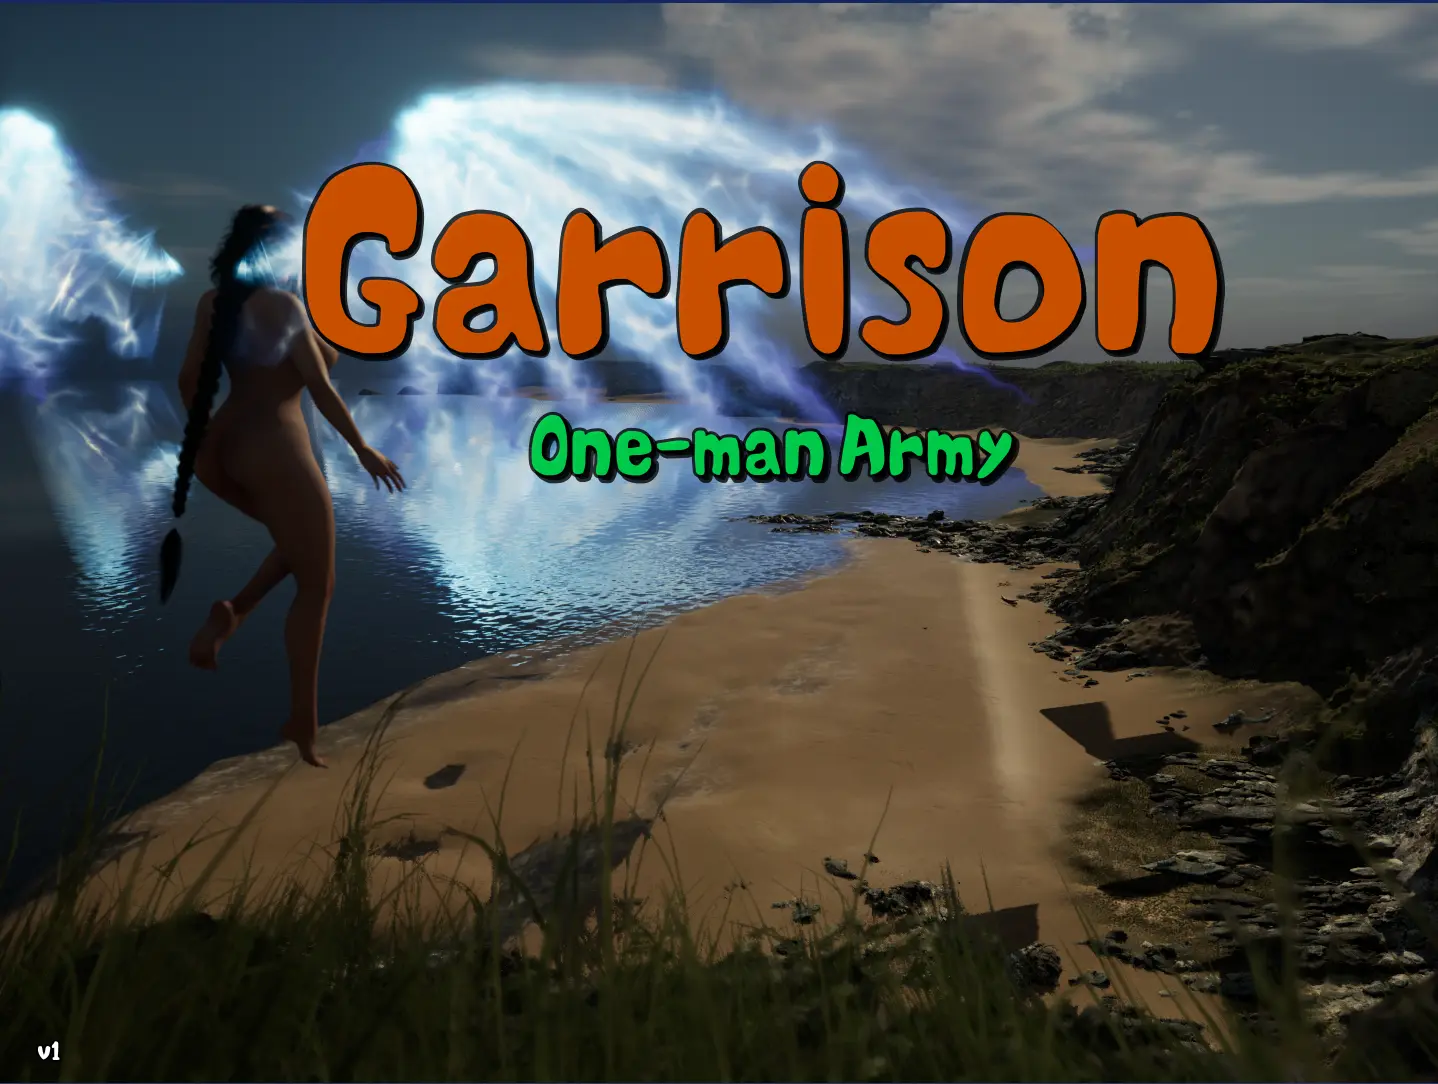 Garrison One-man Army main image